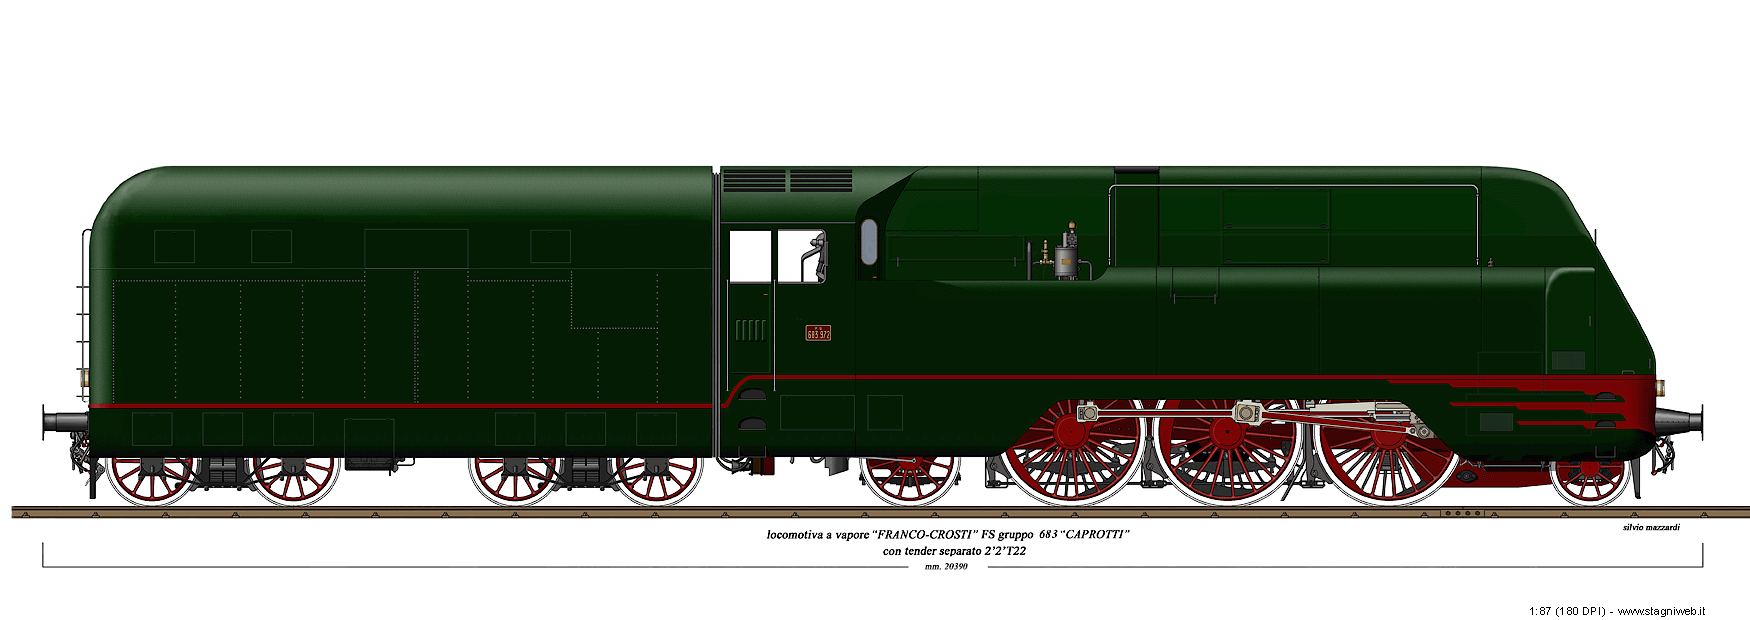 Locomotive a vapore con tender separato - Gr. 683 Franco-Crosti carenata